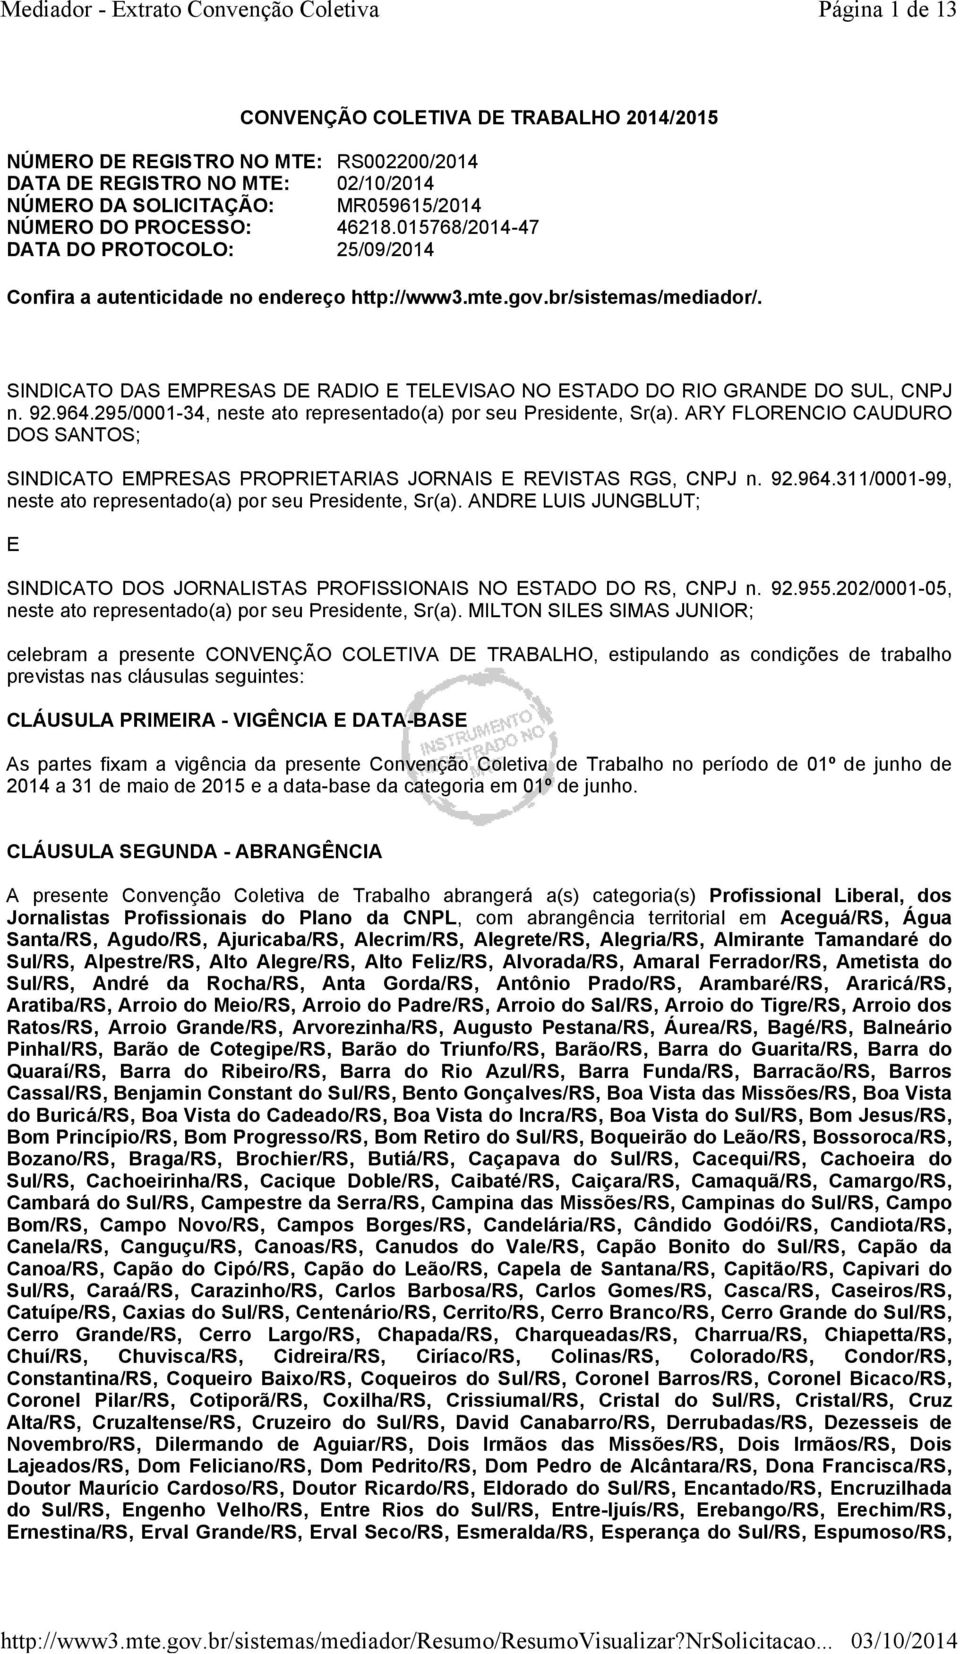 SINDICATO DAS EMPRESAS DE RADIO E TELEVISAO NO ESTADO DO RIO GRANDE DO SUL, CNPJ n. 92.964.295/0001-34, neste ato representado(a) por seu Presidente, Sr(a).